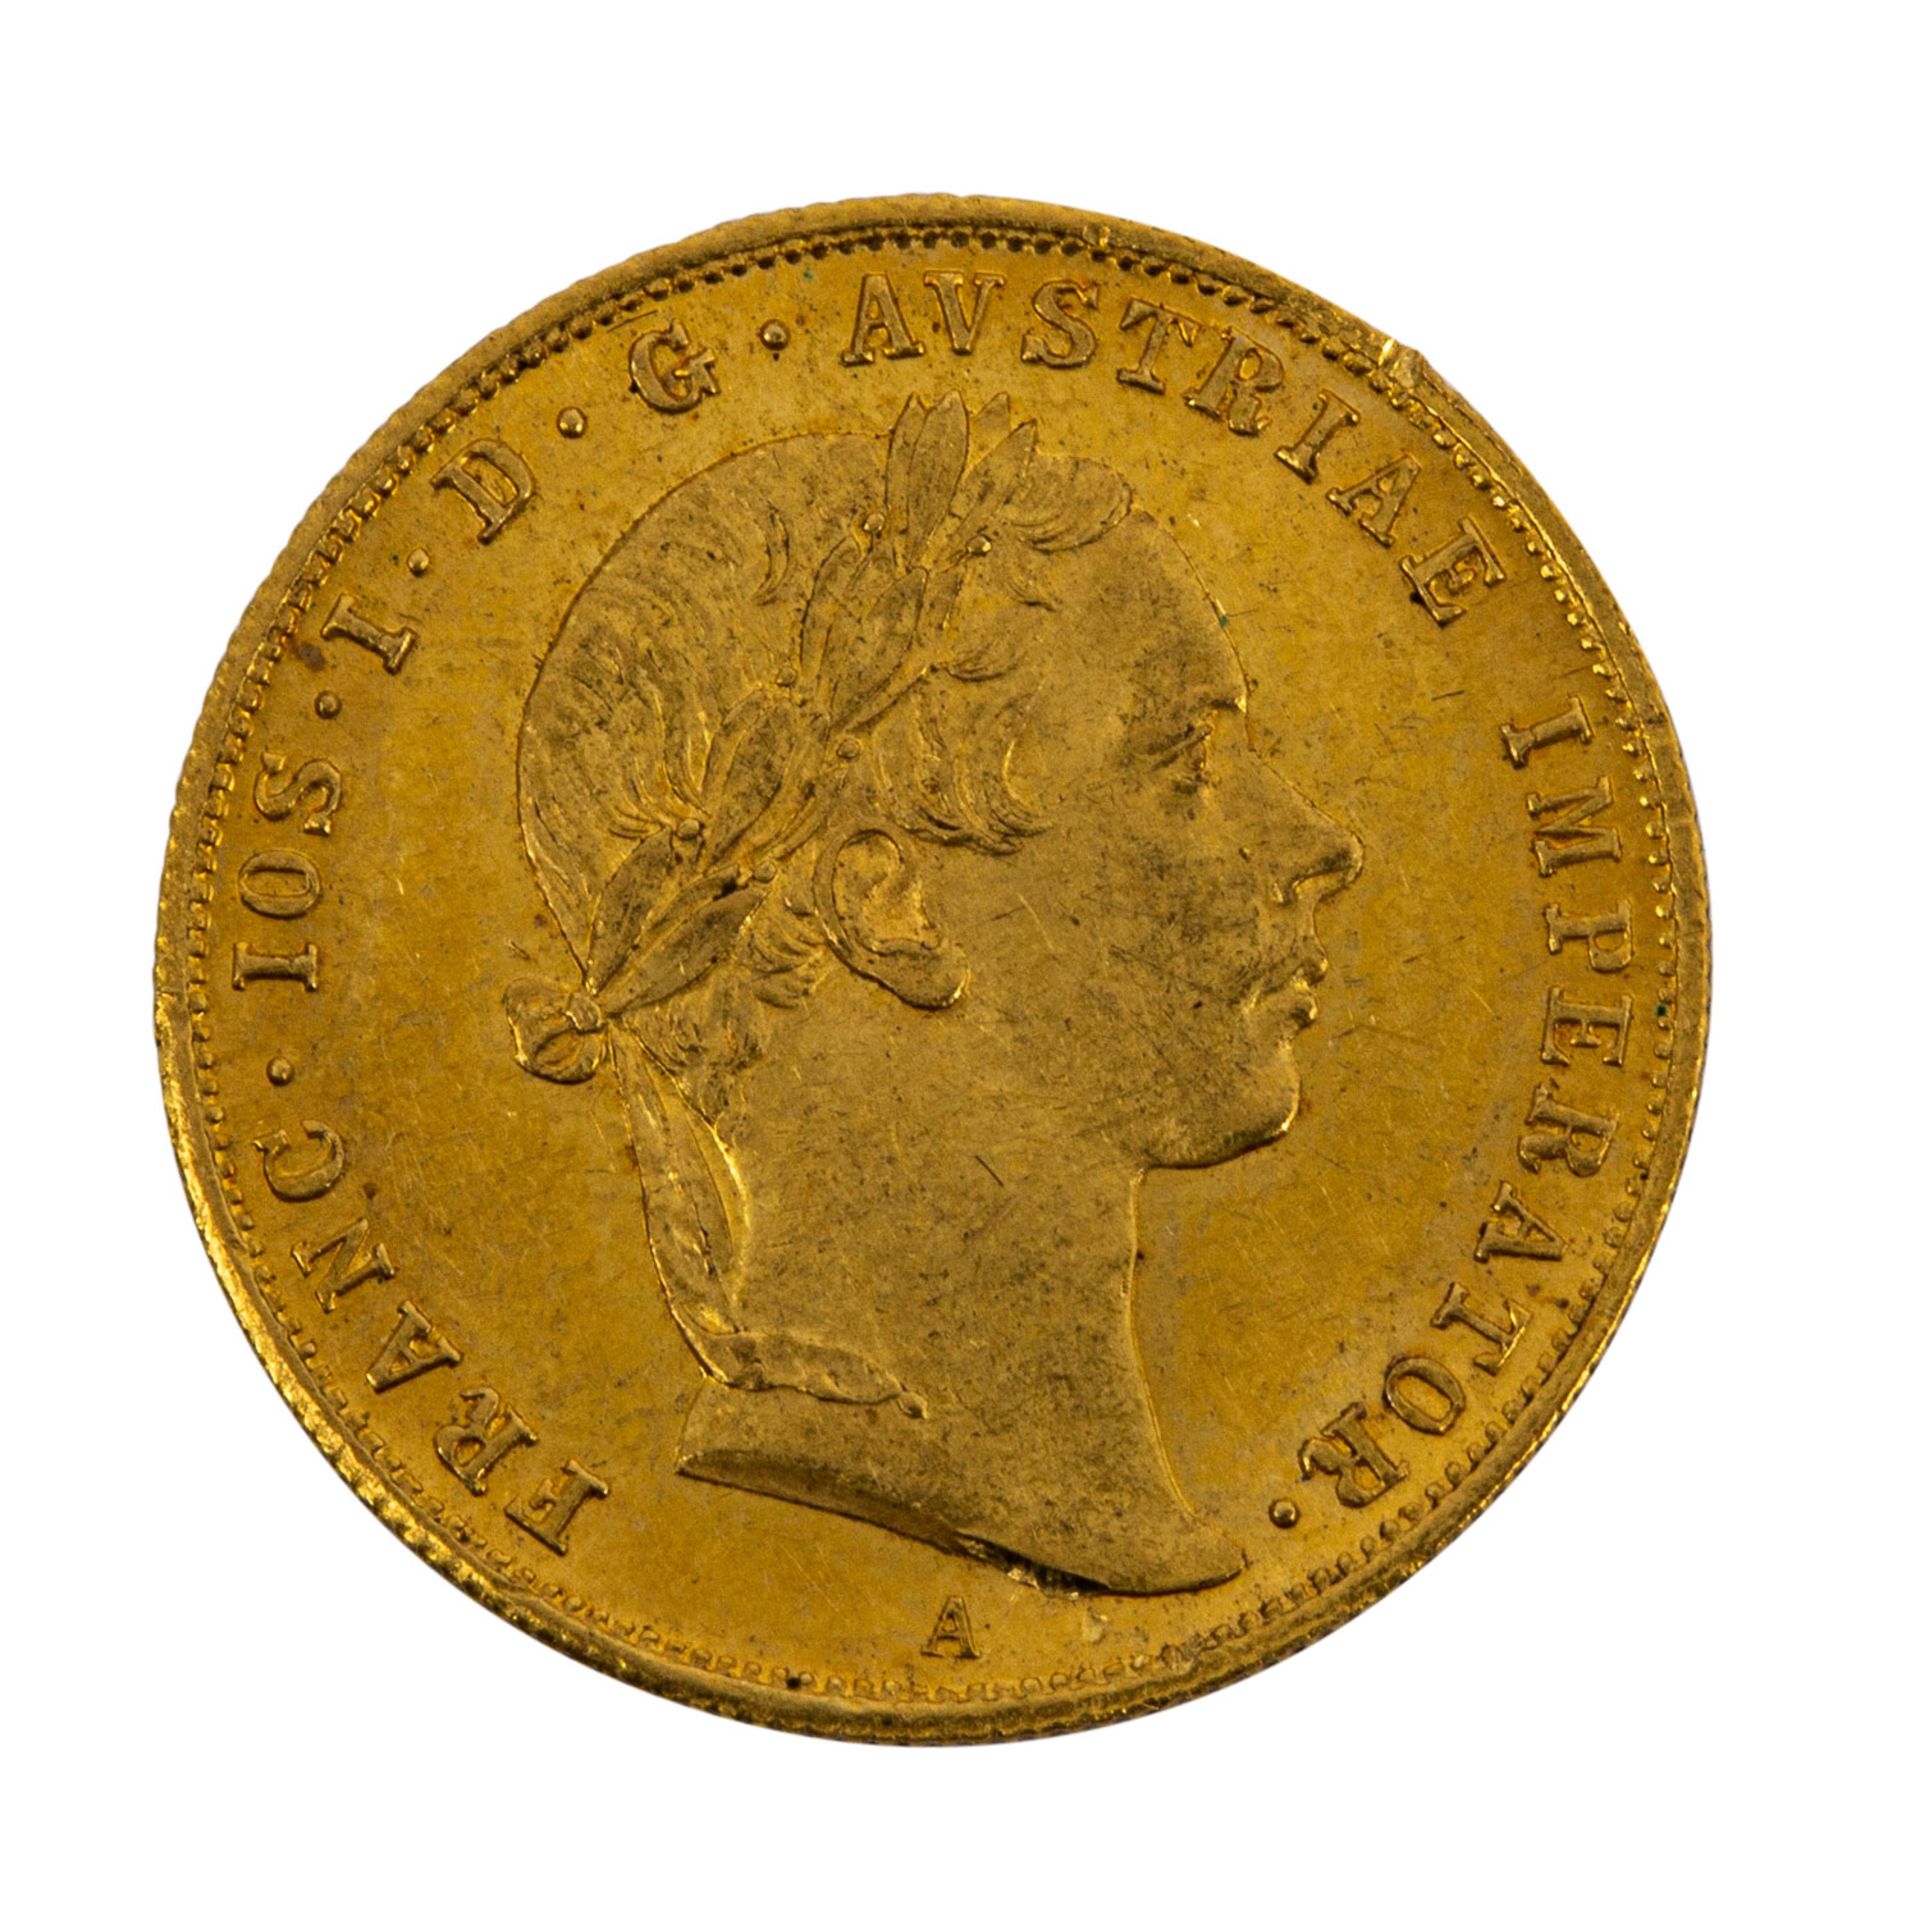 Österreich - Dukat 1856/A, Franz Josef I, vz., Randfehler. | Austria - Ducat